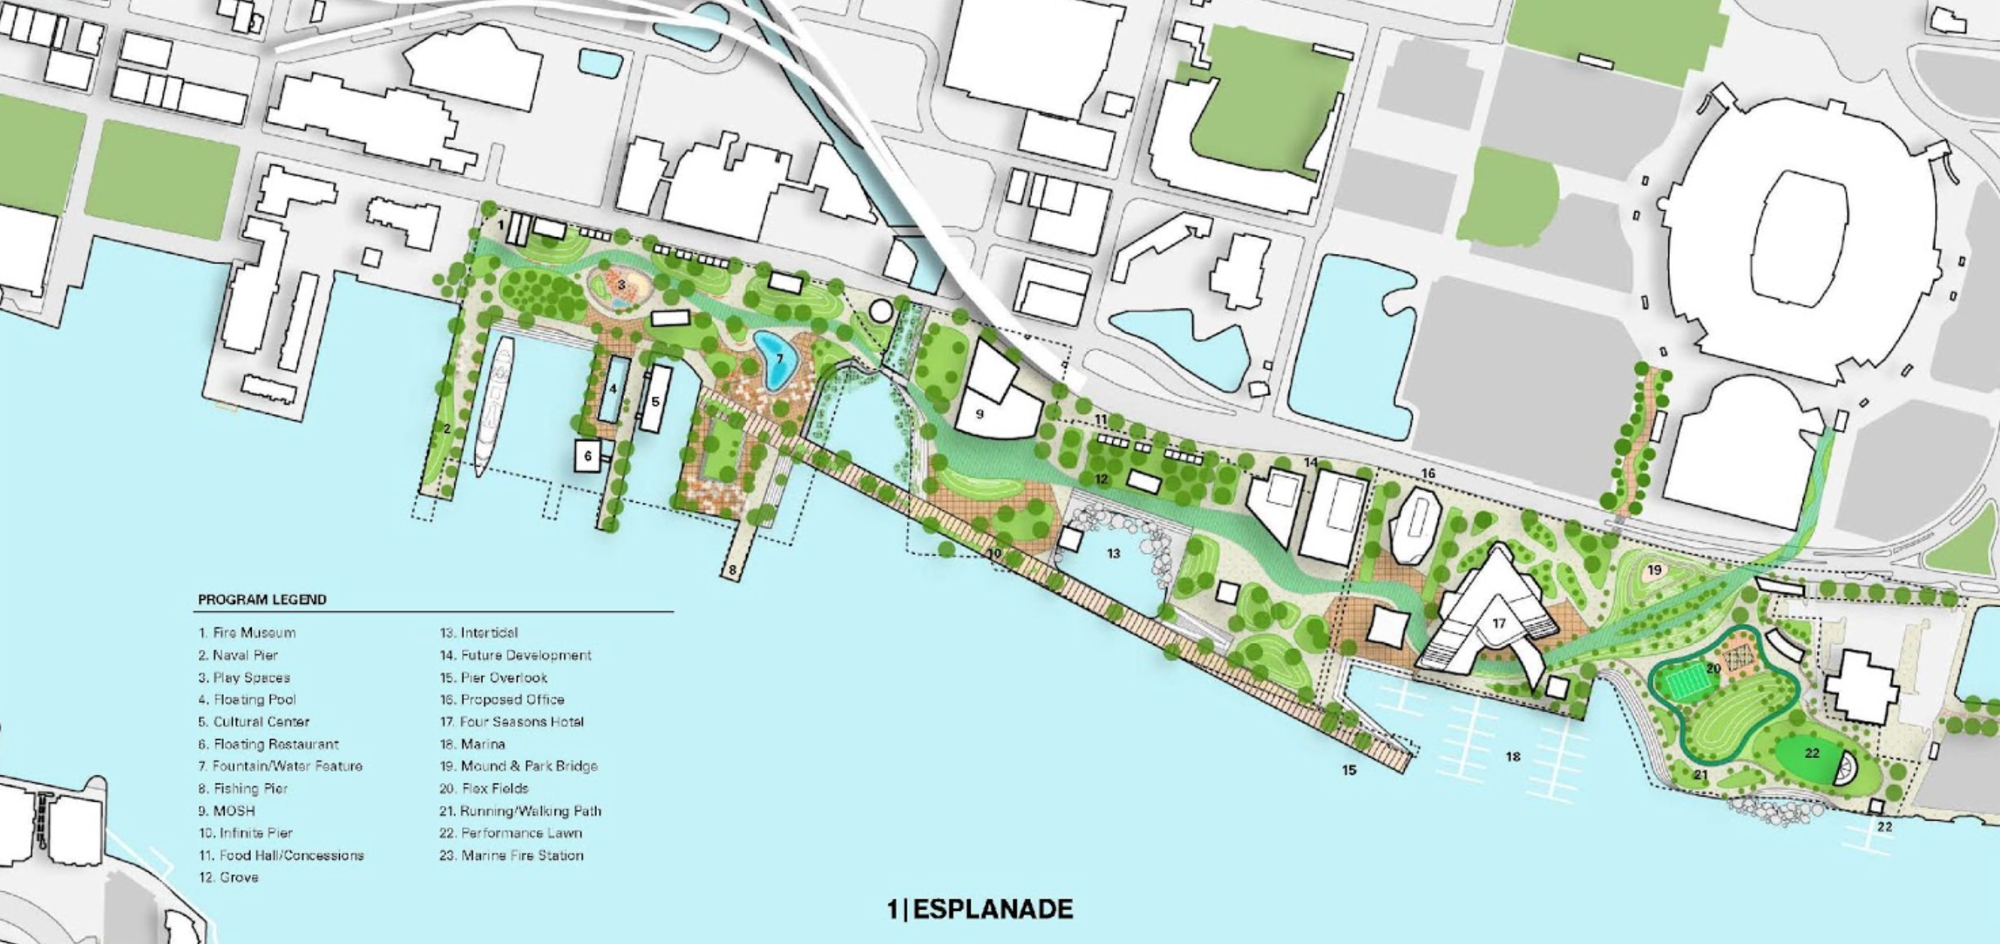 A draft of a riverfront master plan.